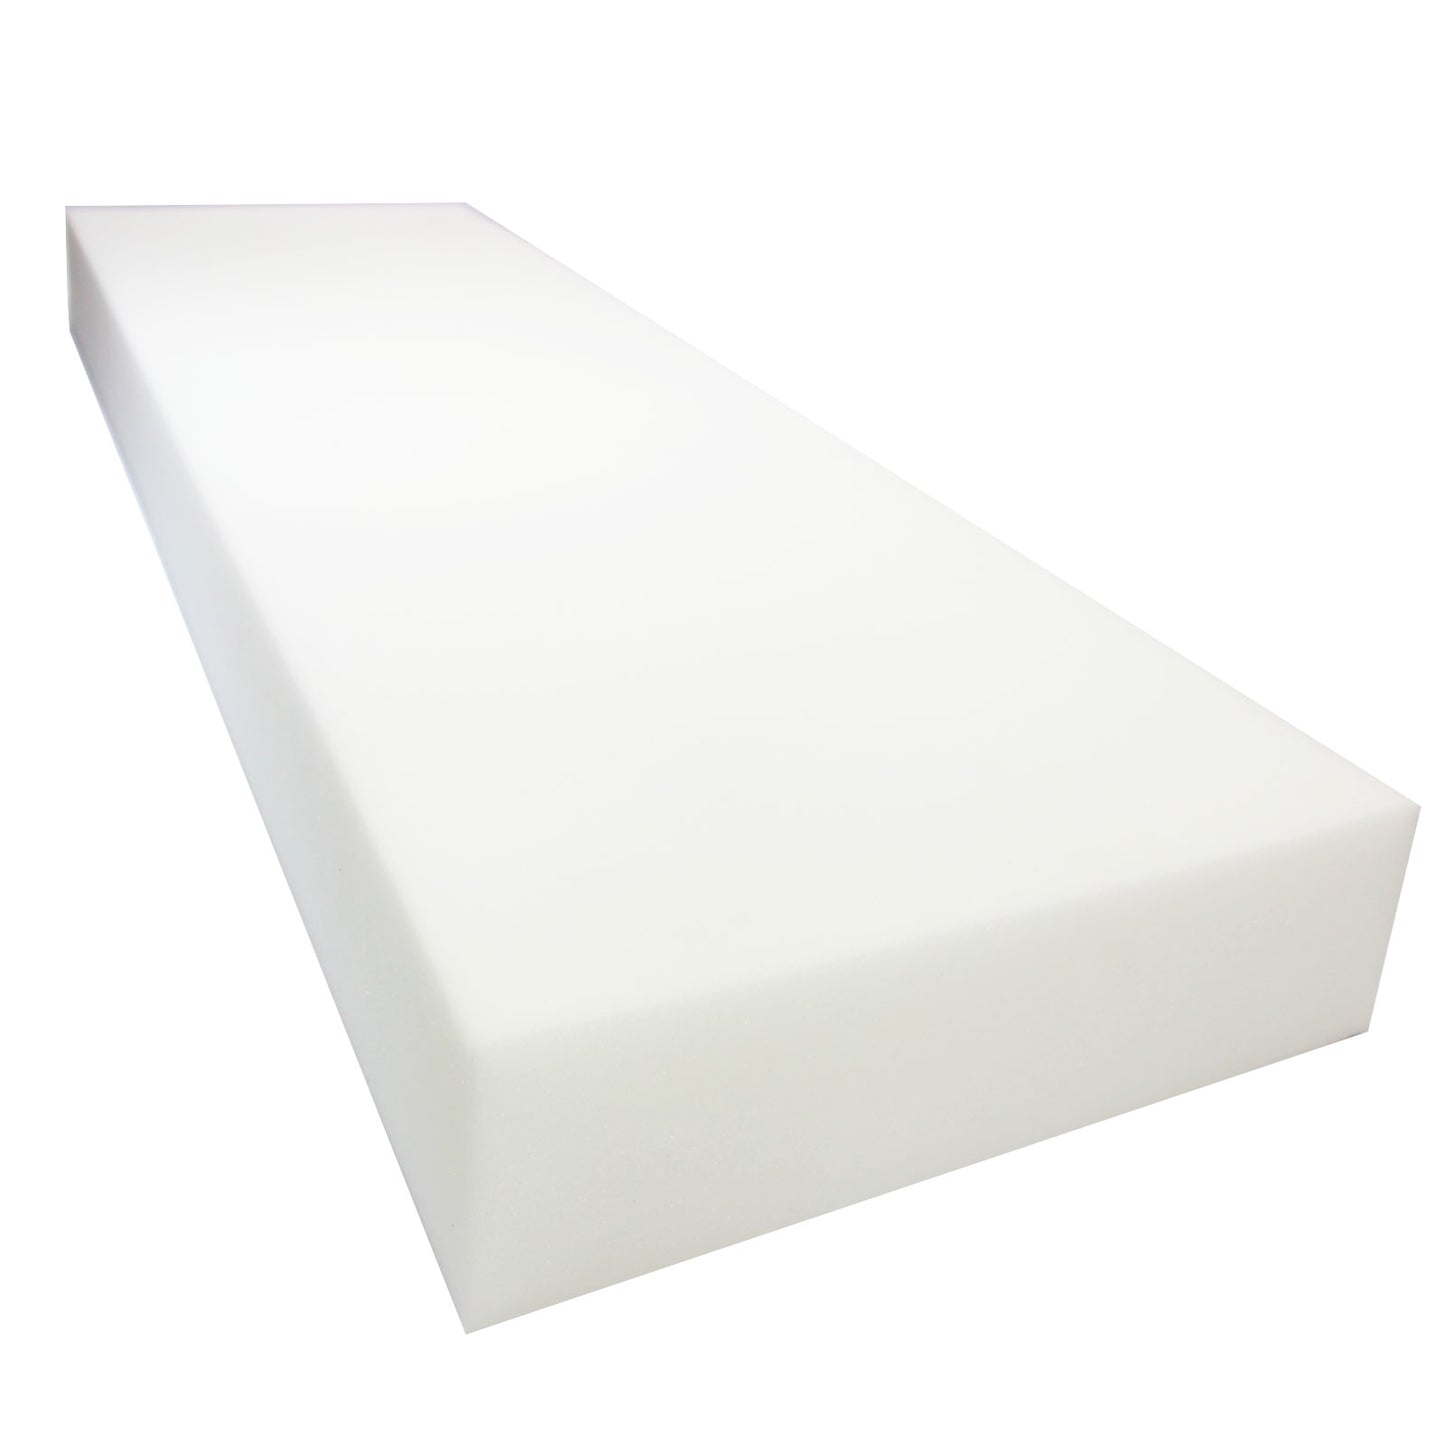 6 x 24 x 108 High Density Upholstery Foam by Onlinefabricstore | Michaels